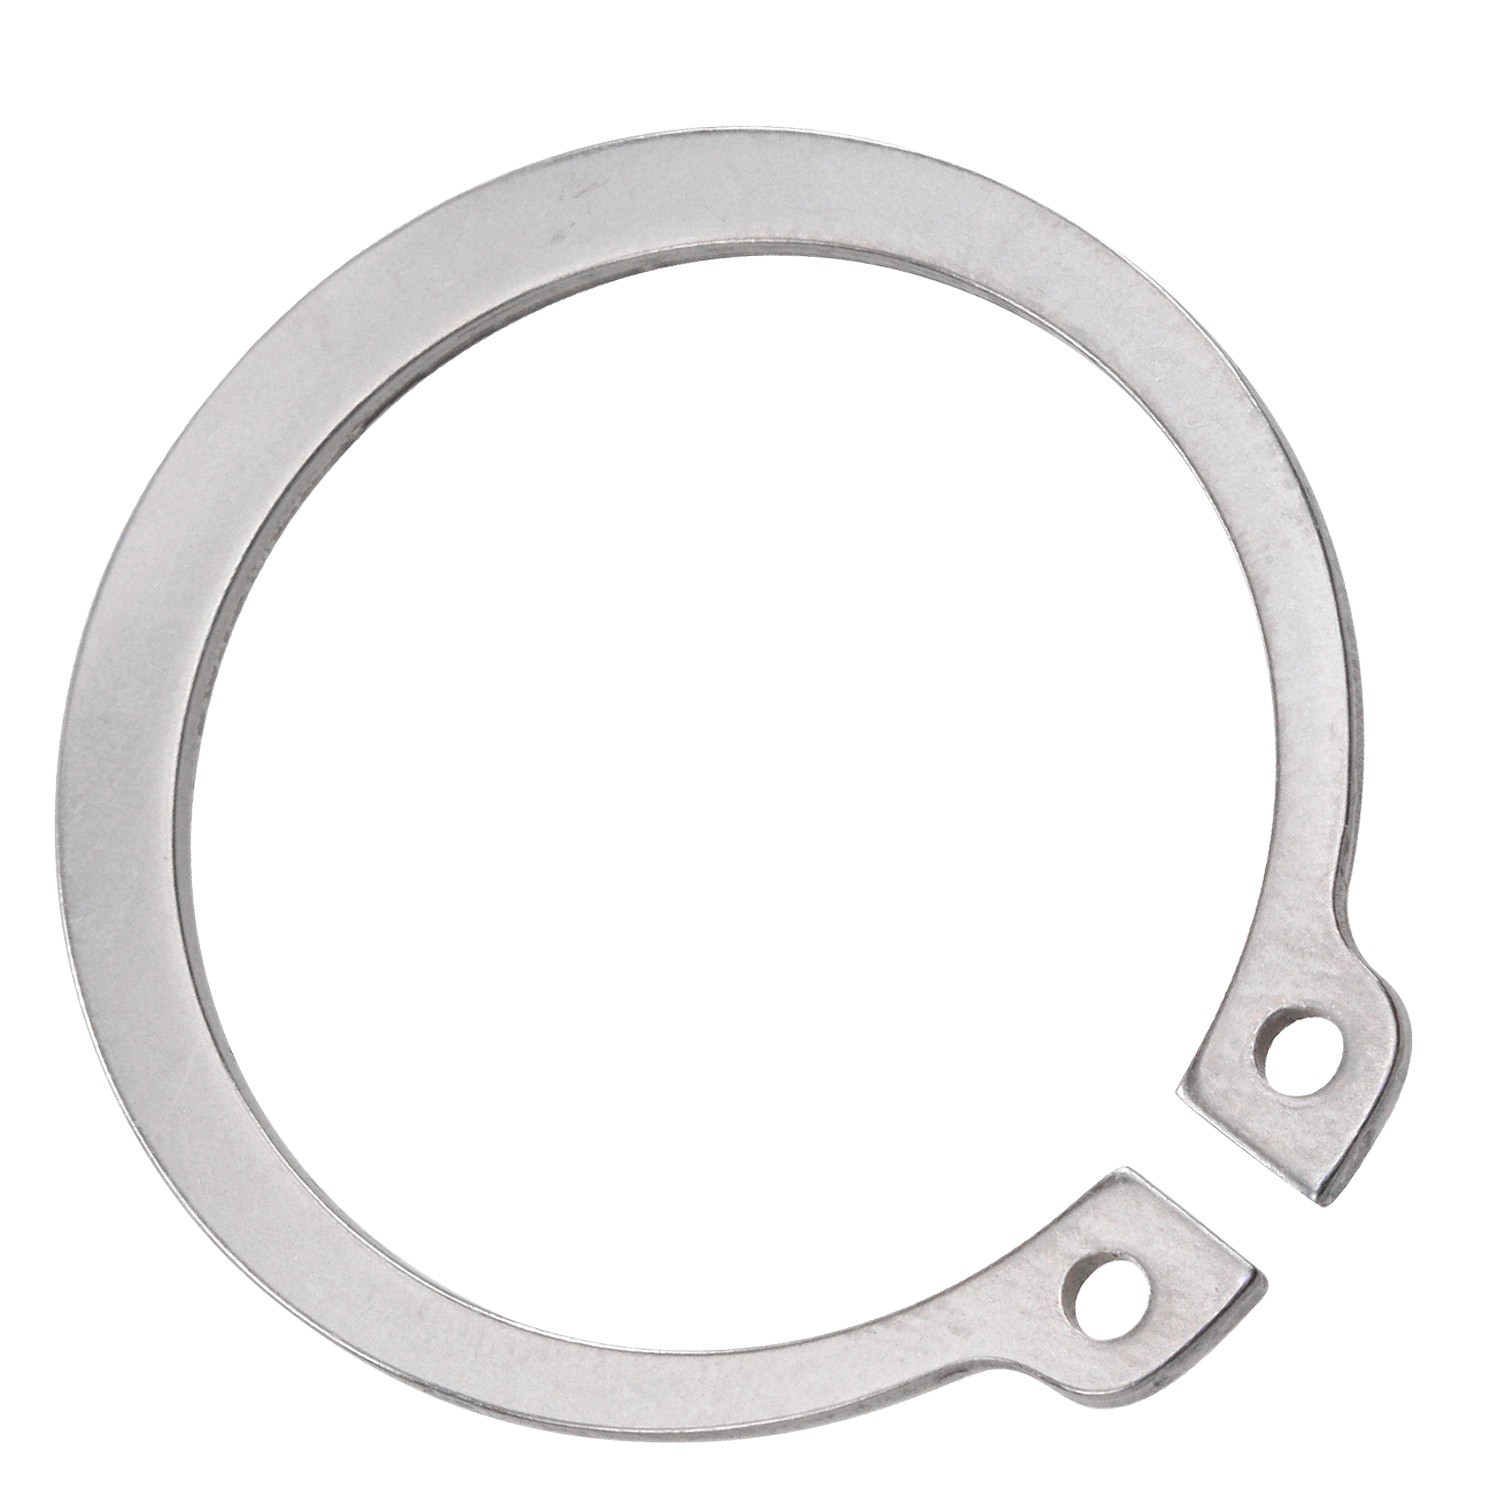 Кольцо стопорное наружное 14х1 DIN 471, нержавеющая сталь A4 - фото